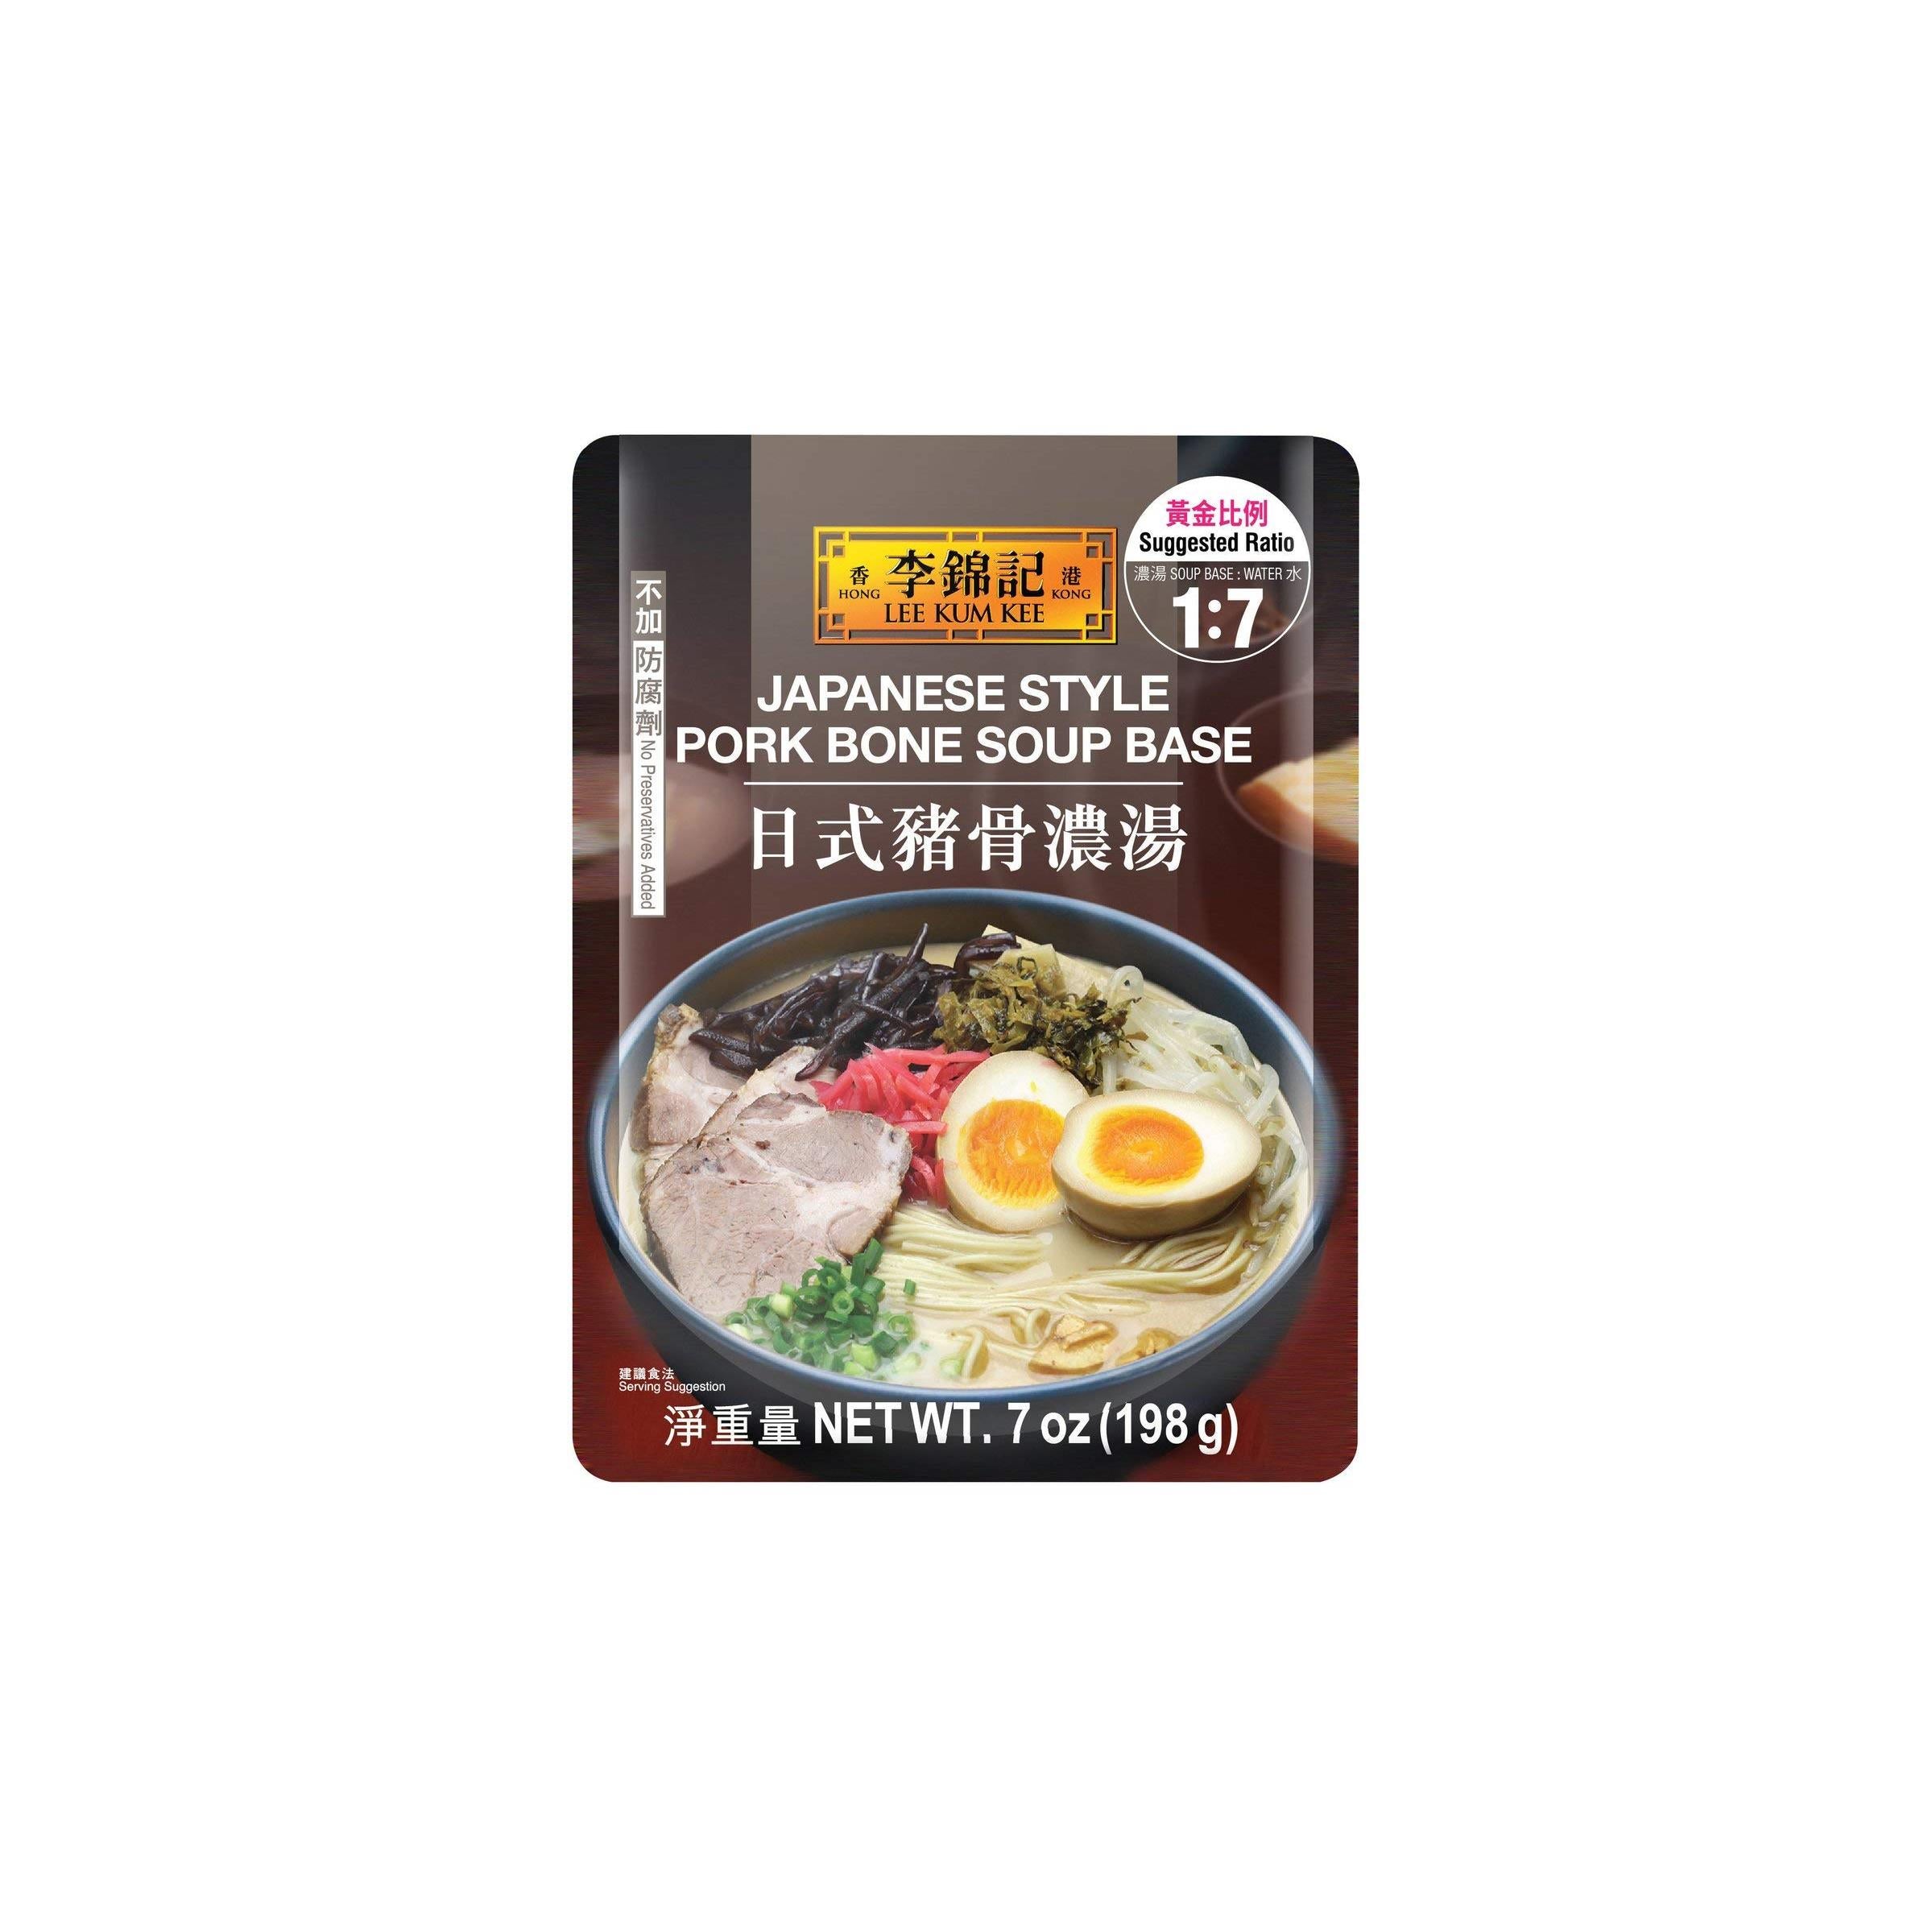 Lee Kum Kee Japanese Style Pork Bone Soup Base 李锦记日式猪骨浓汤 Net wt. 7 Oz (1)